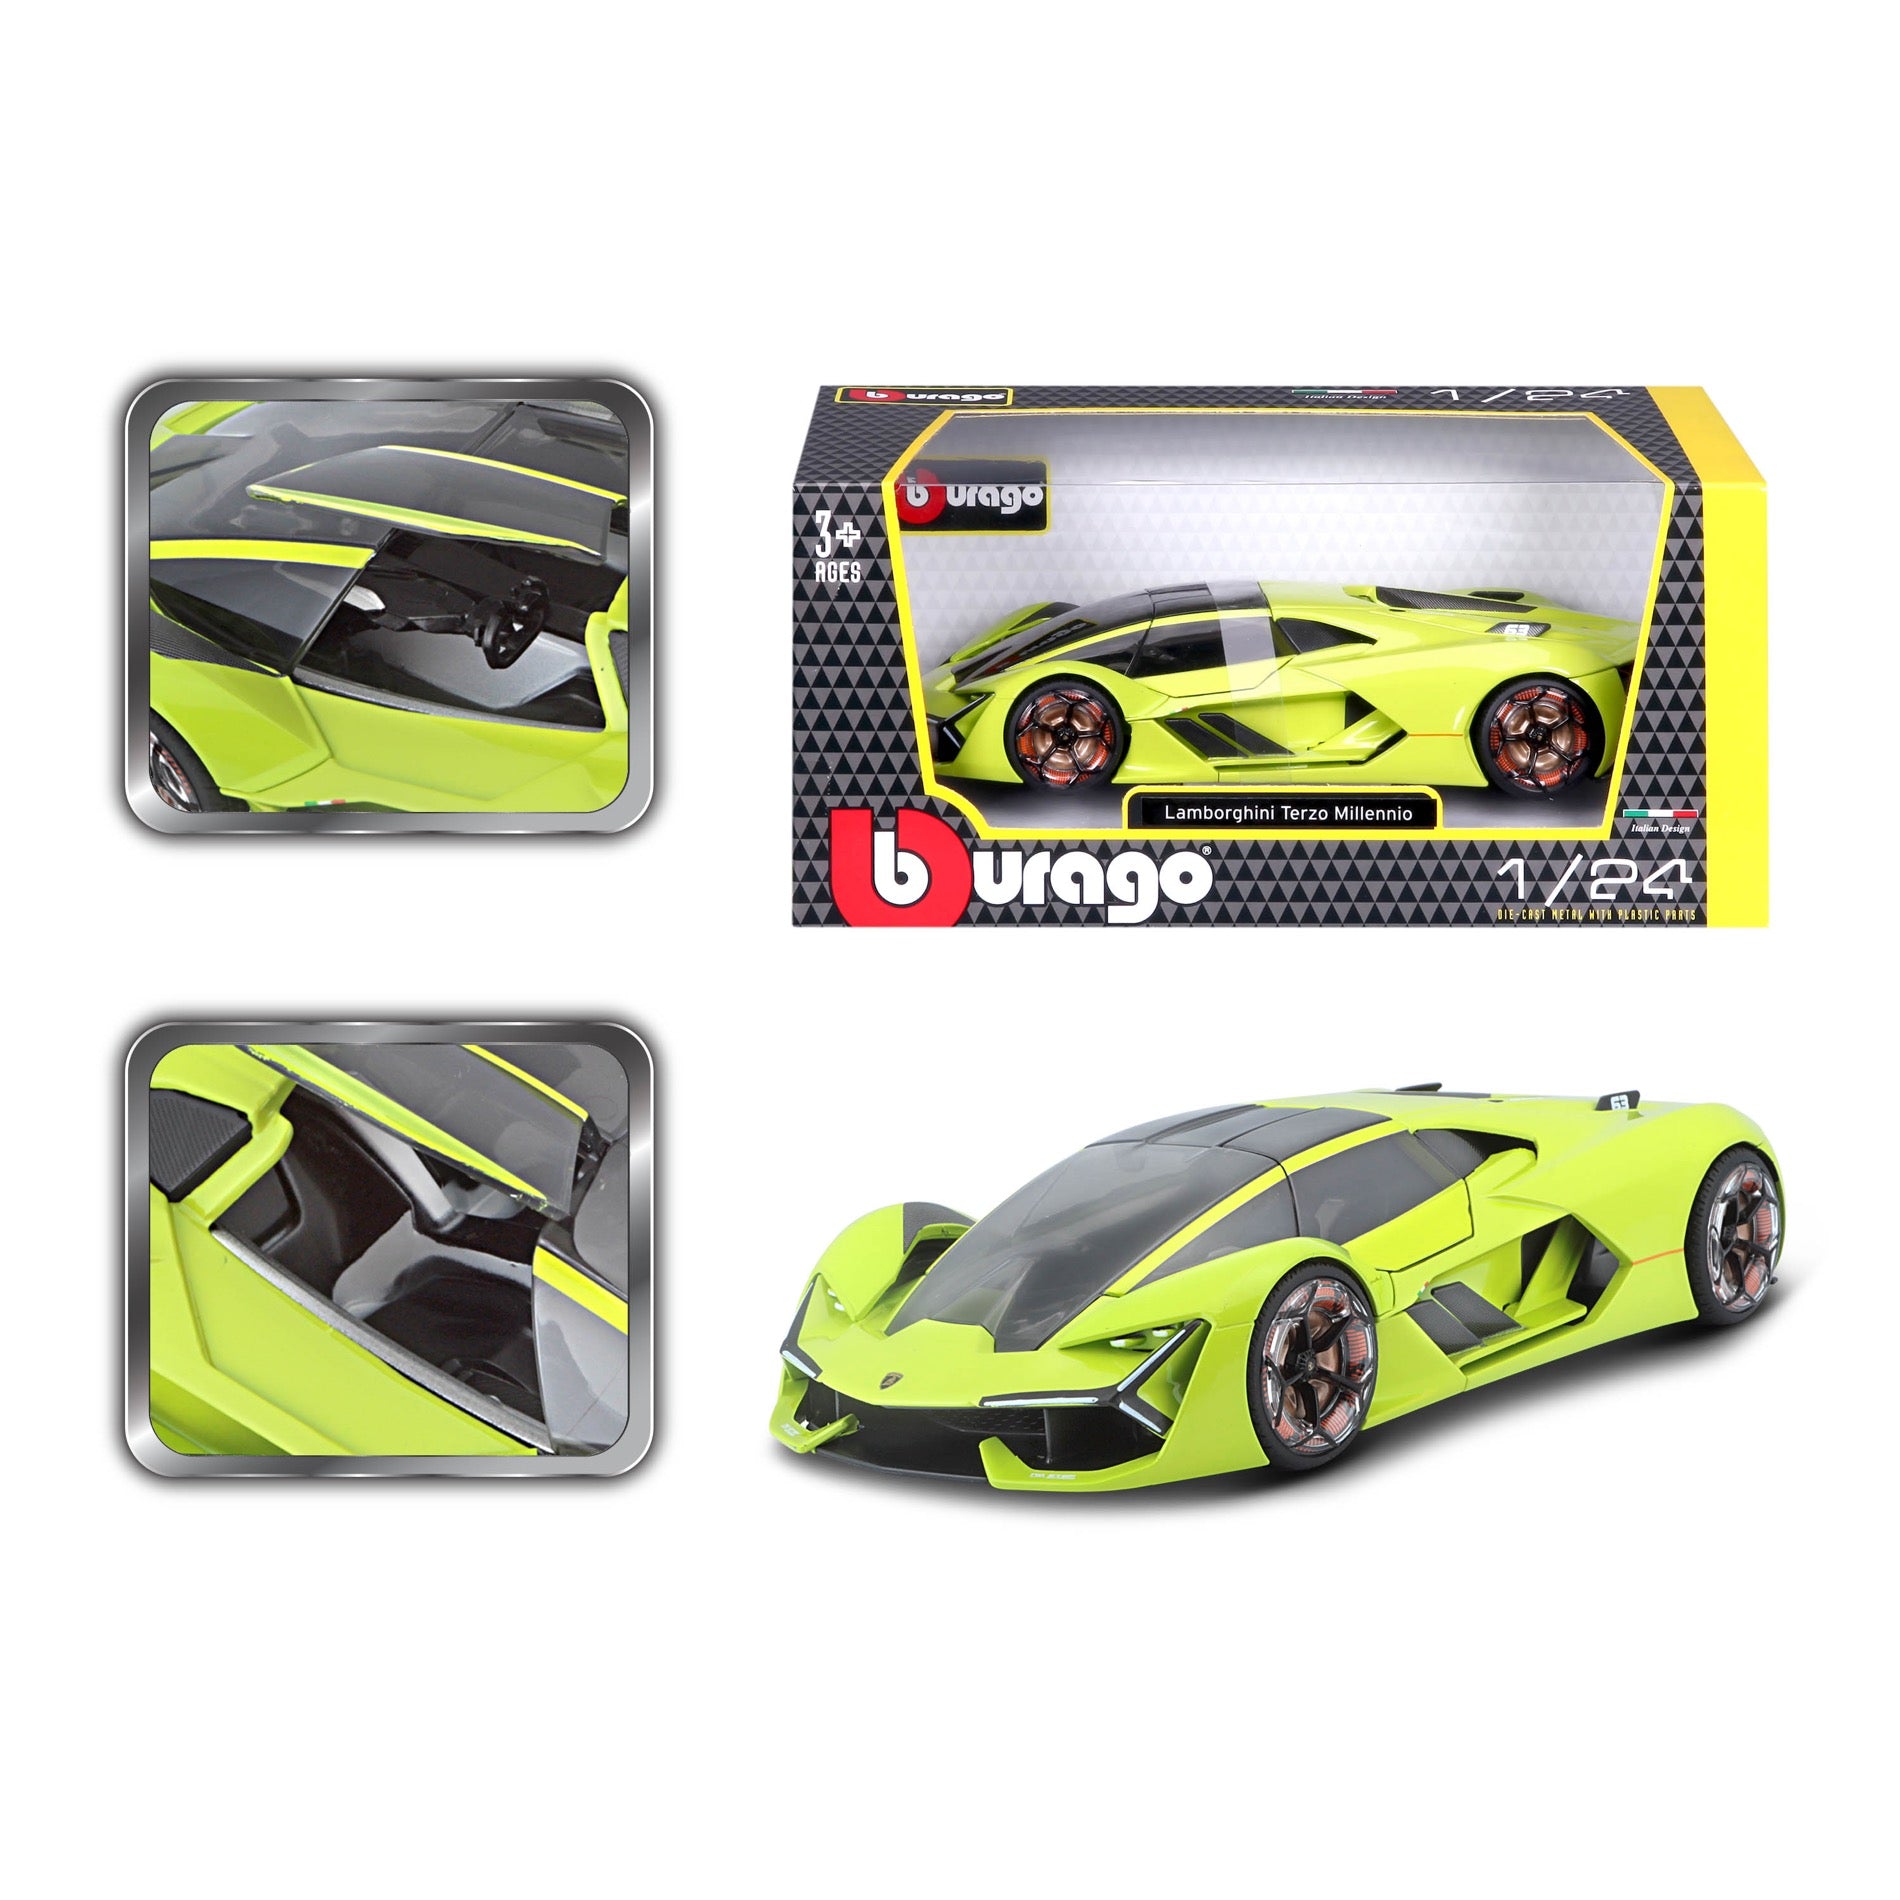 18-21094 - Bburago - 1:24 - Lamborghini Terzo Millennio -verde